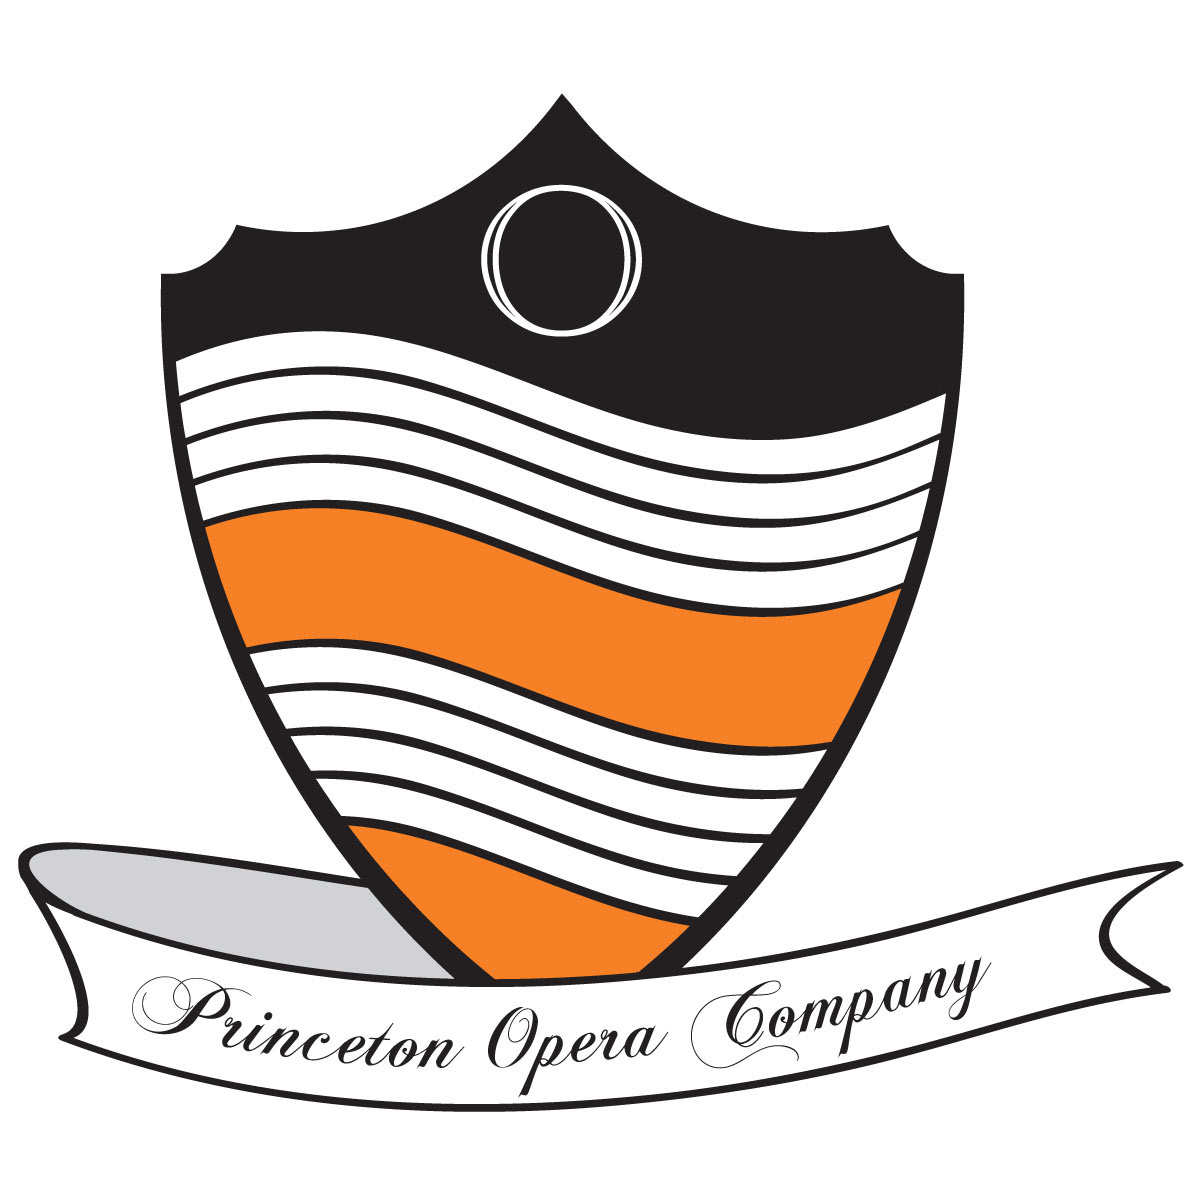 Princeton Opera Company opera crest